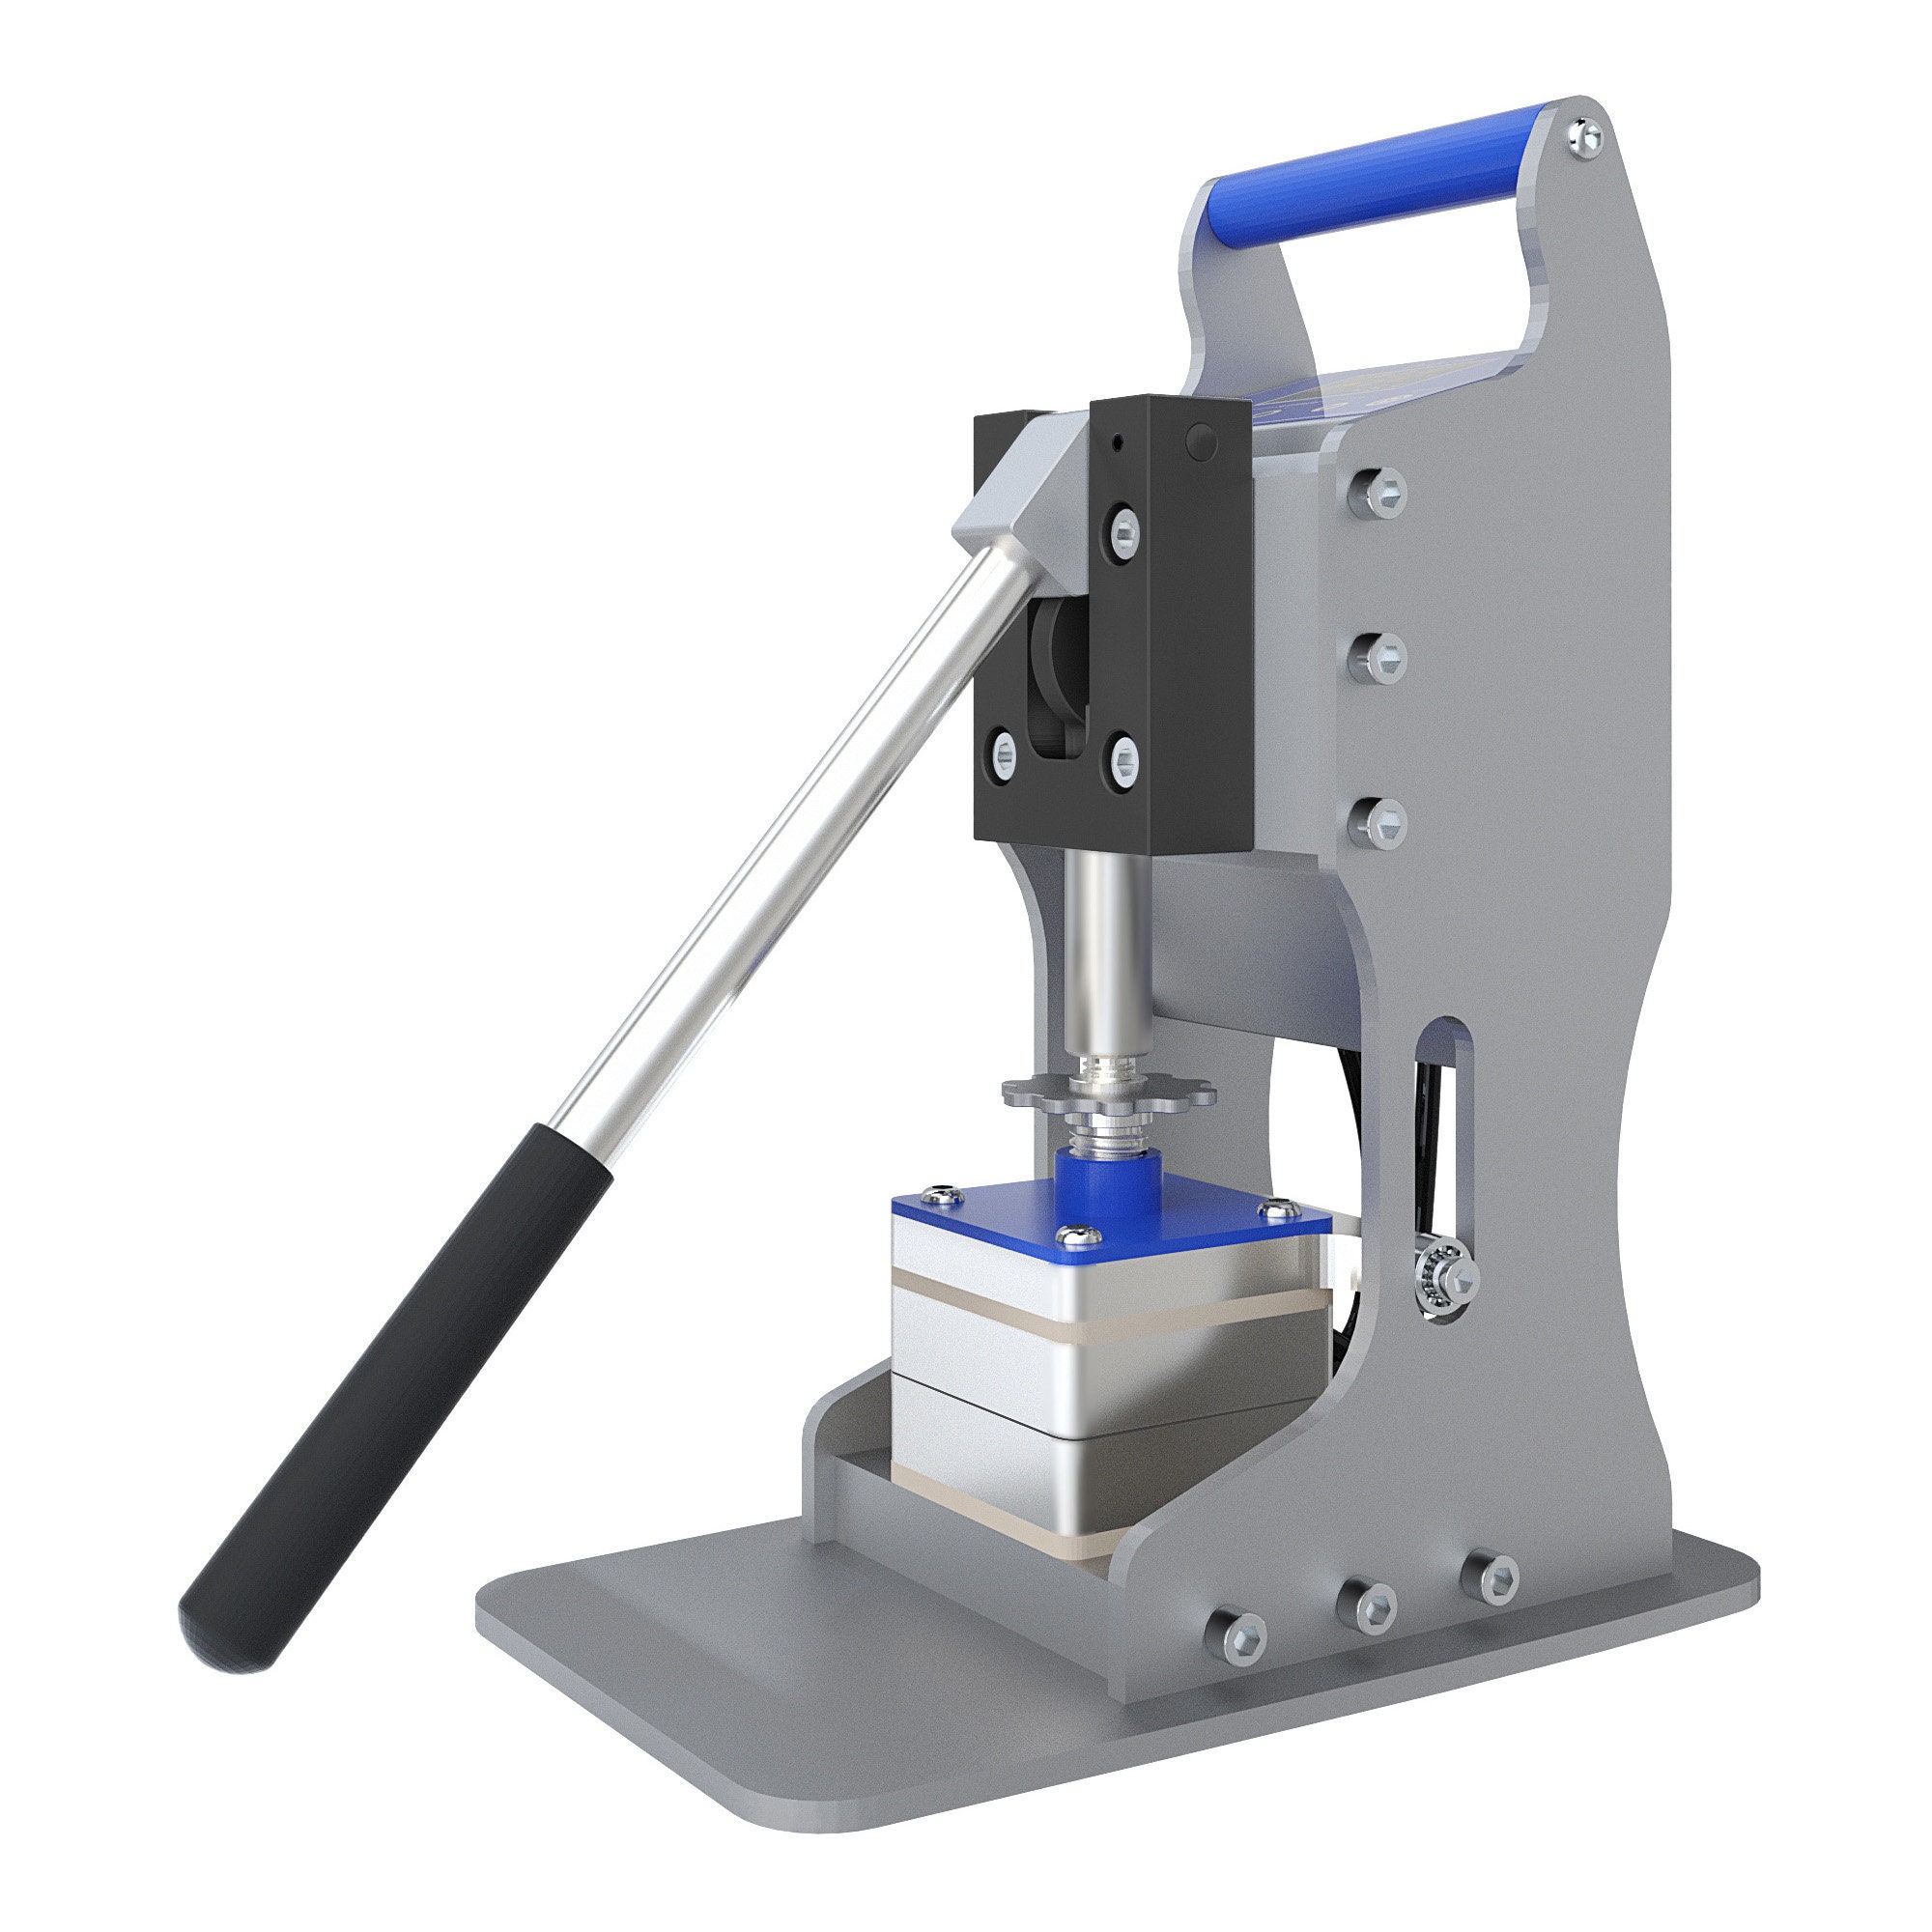 360 Digital Heat Press and Accessories Craft Machine for T Shirt Press Mug Press  Hat Press Plate Presses Craft Tool Machine 